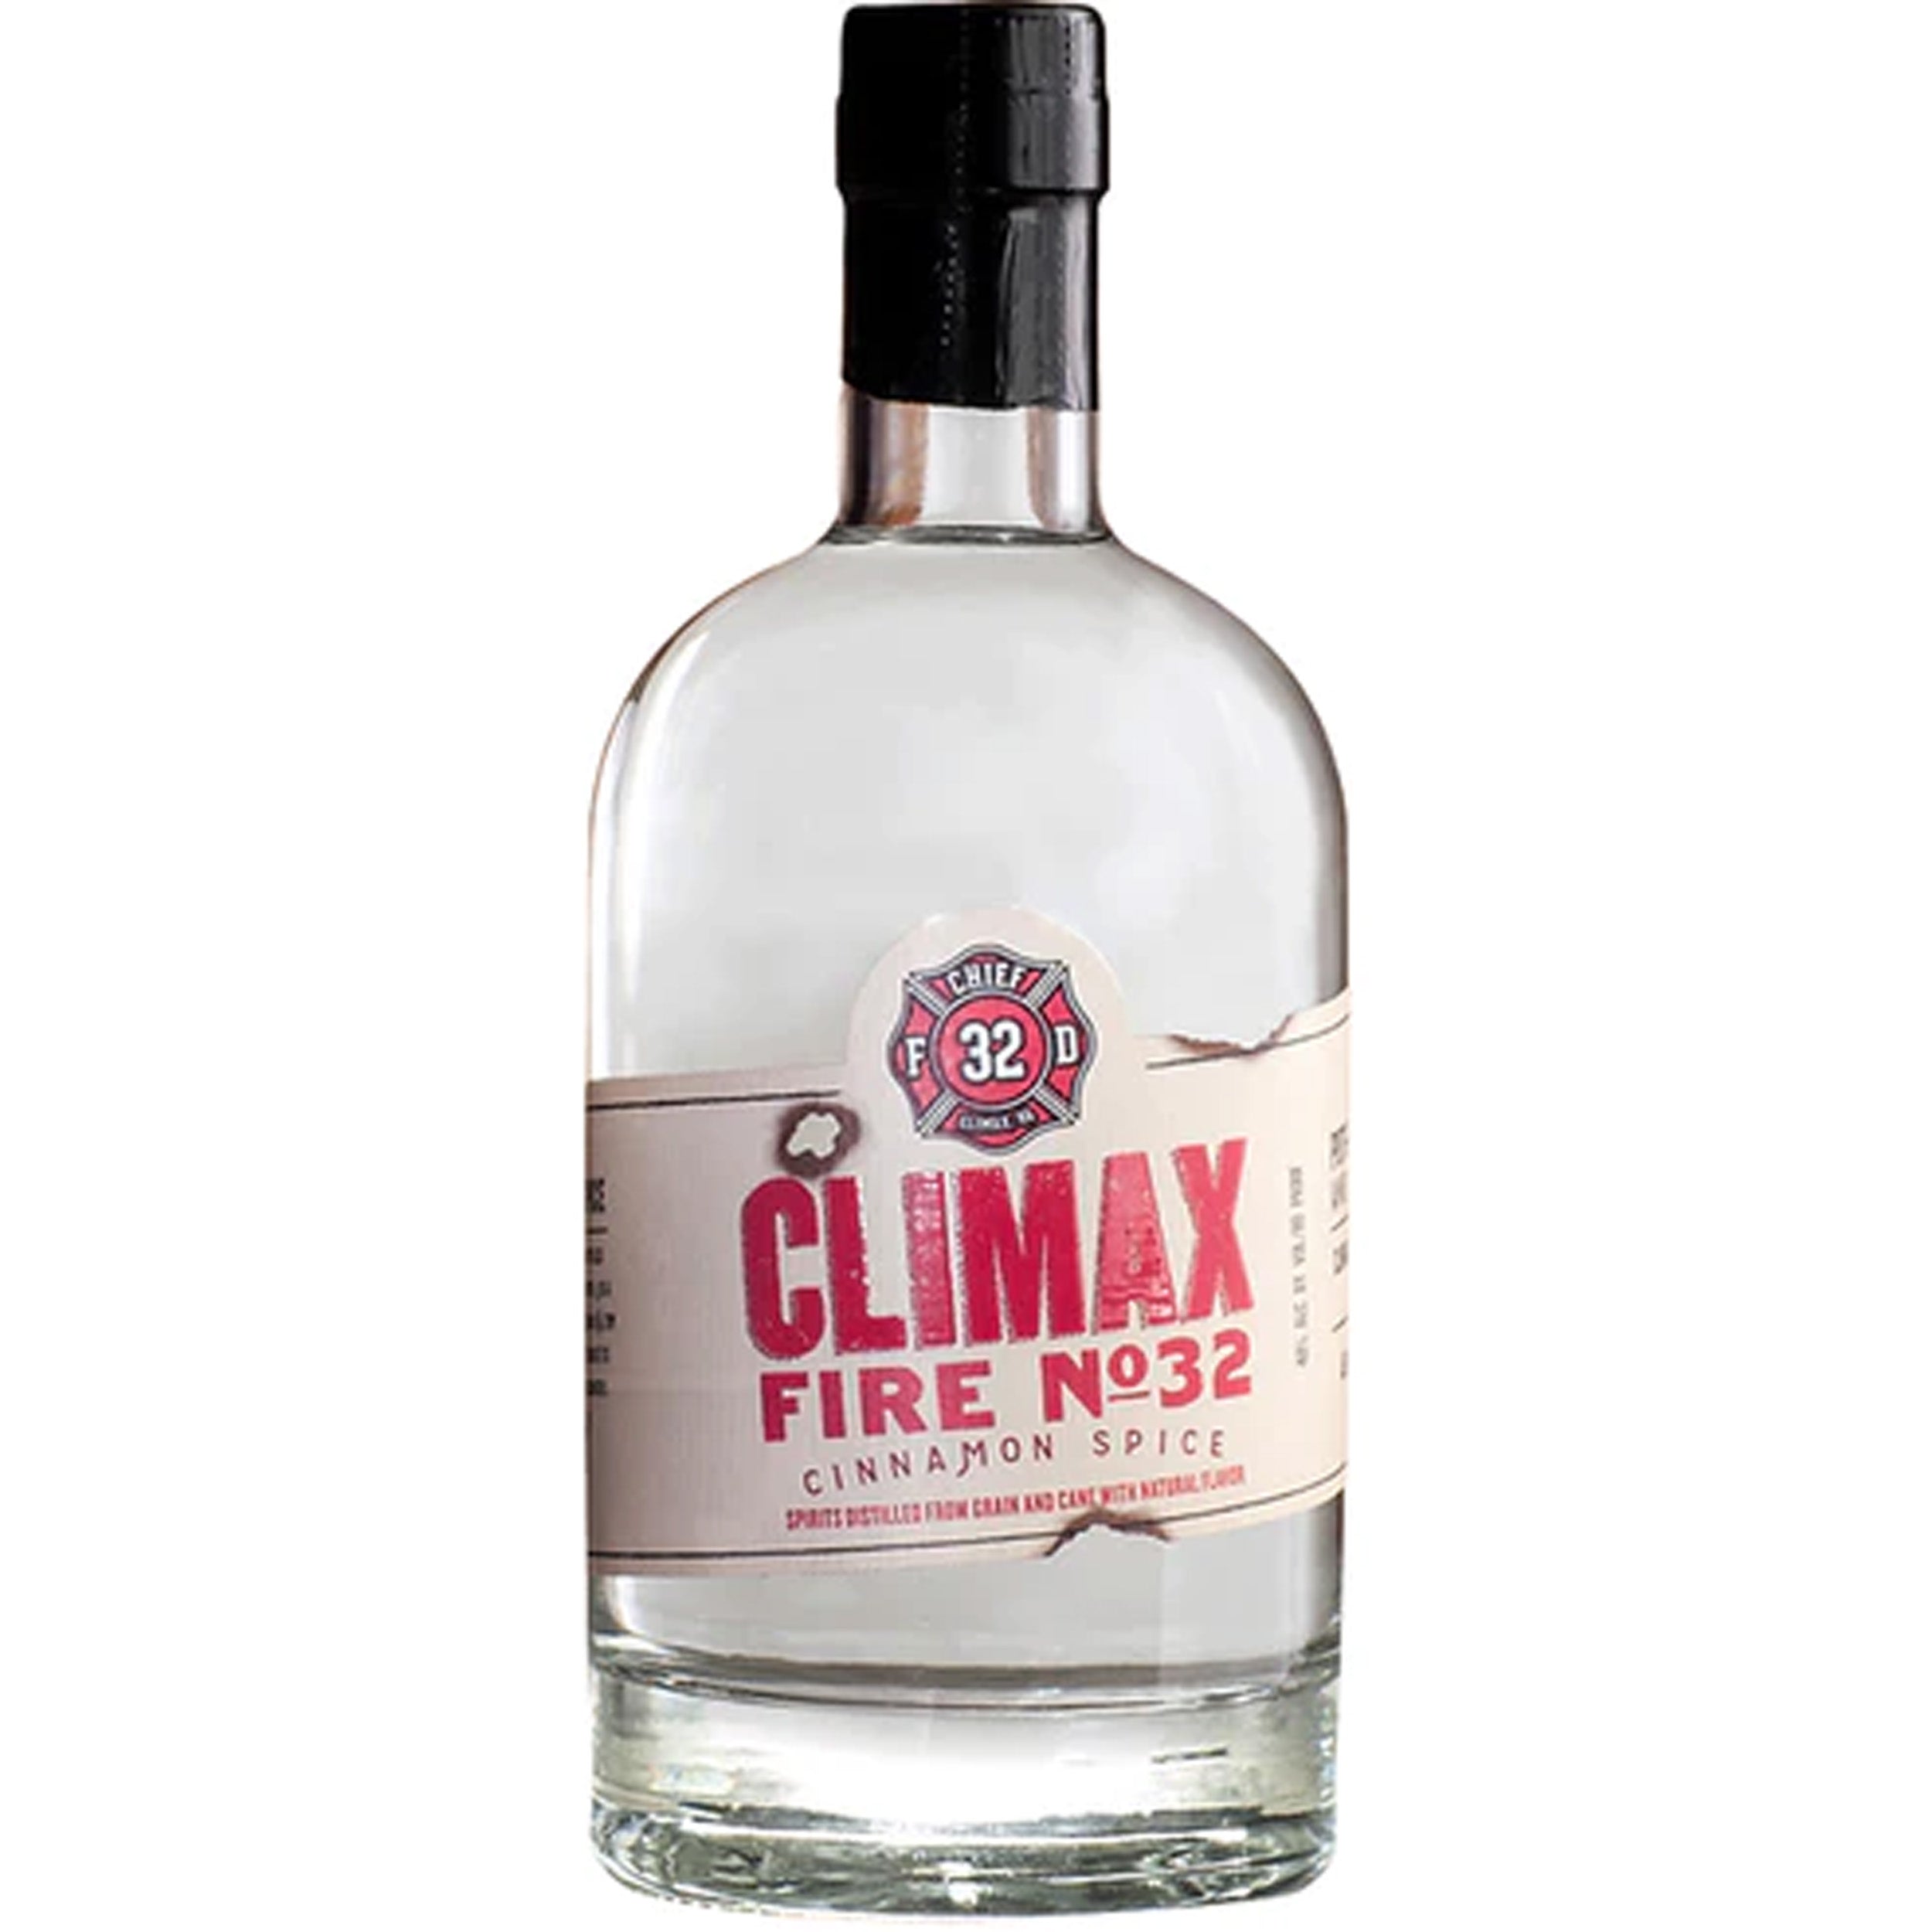 Climax Spirits Fire Liquor – Moonshine Chips 32 No. Spice Cinnamon